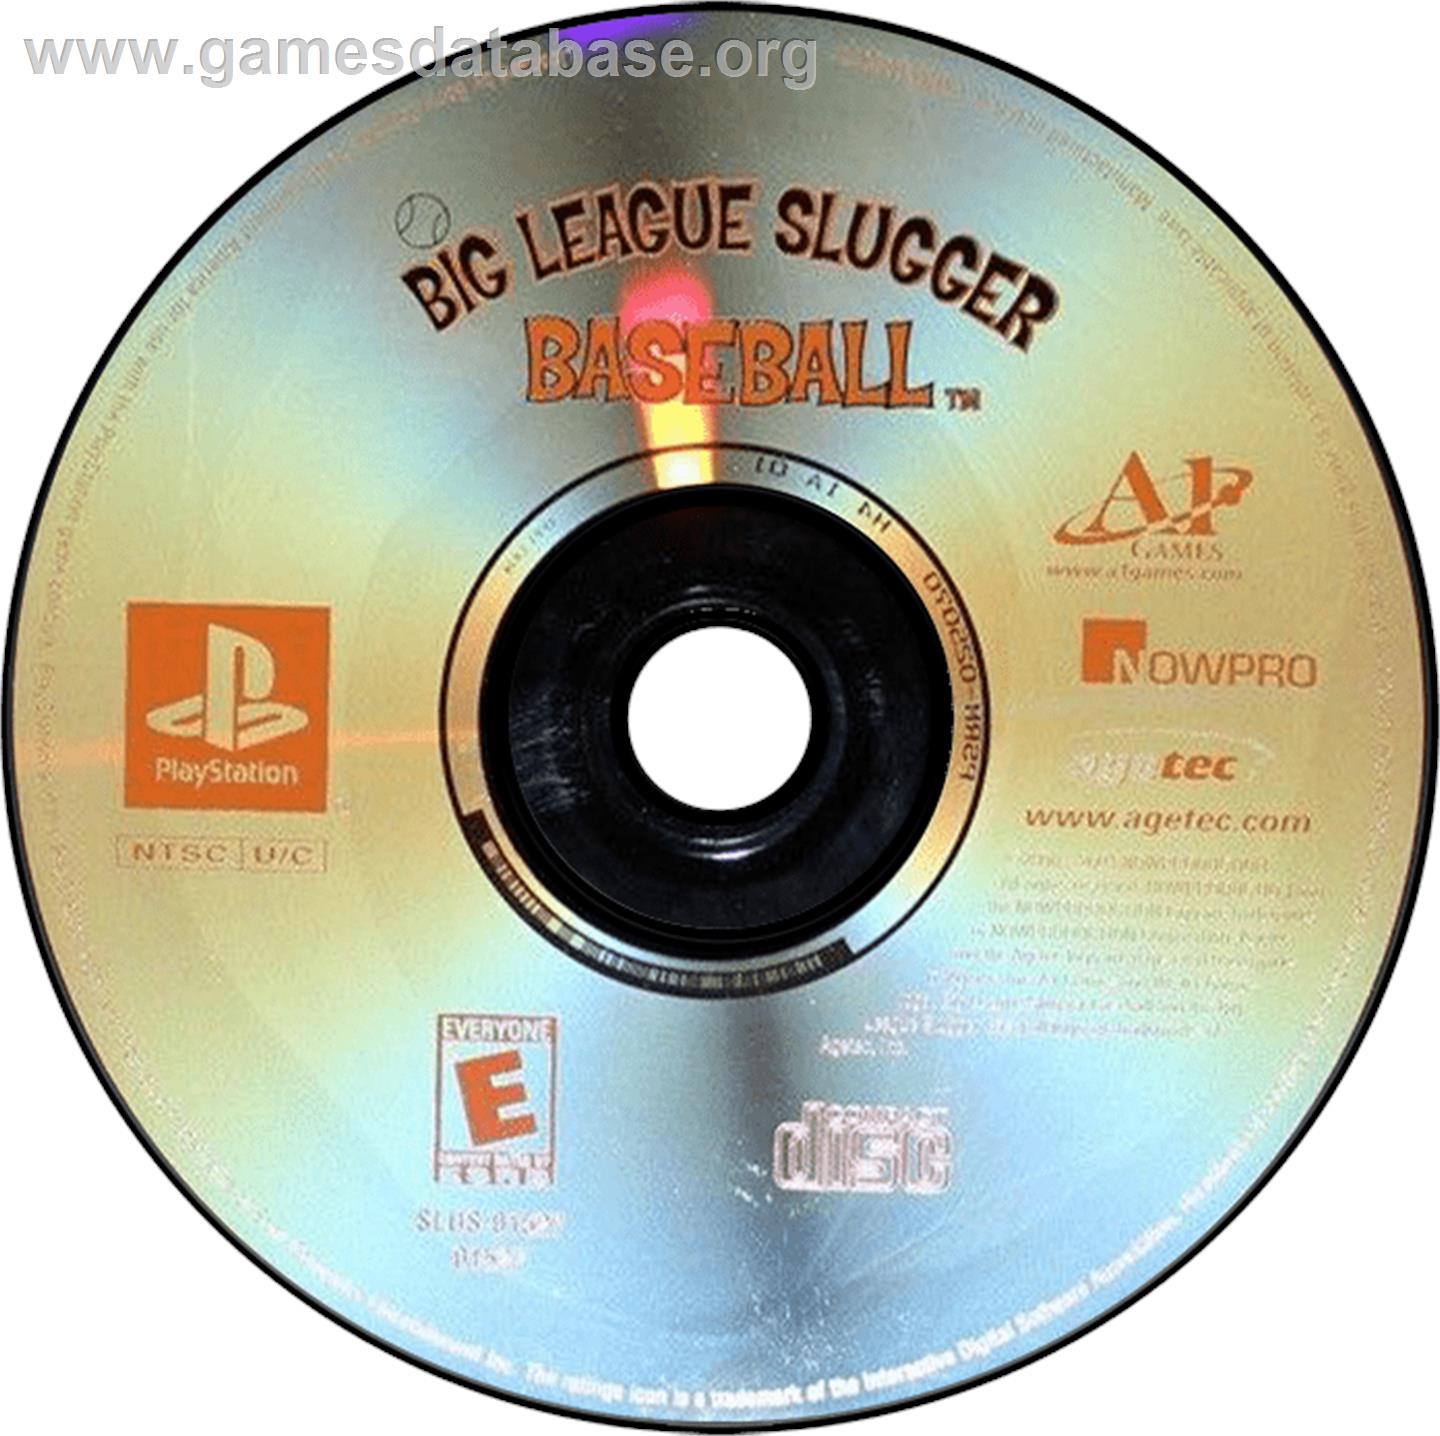 Big League Slugger Baseball - Sony Playstation - Artwork - Disc